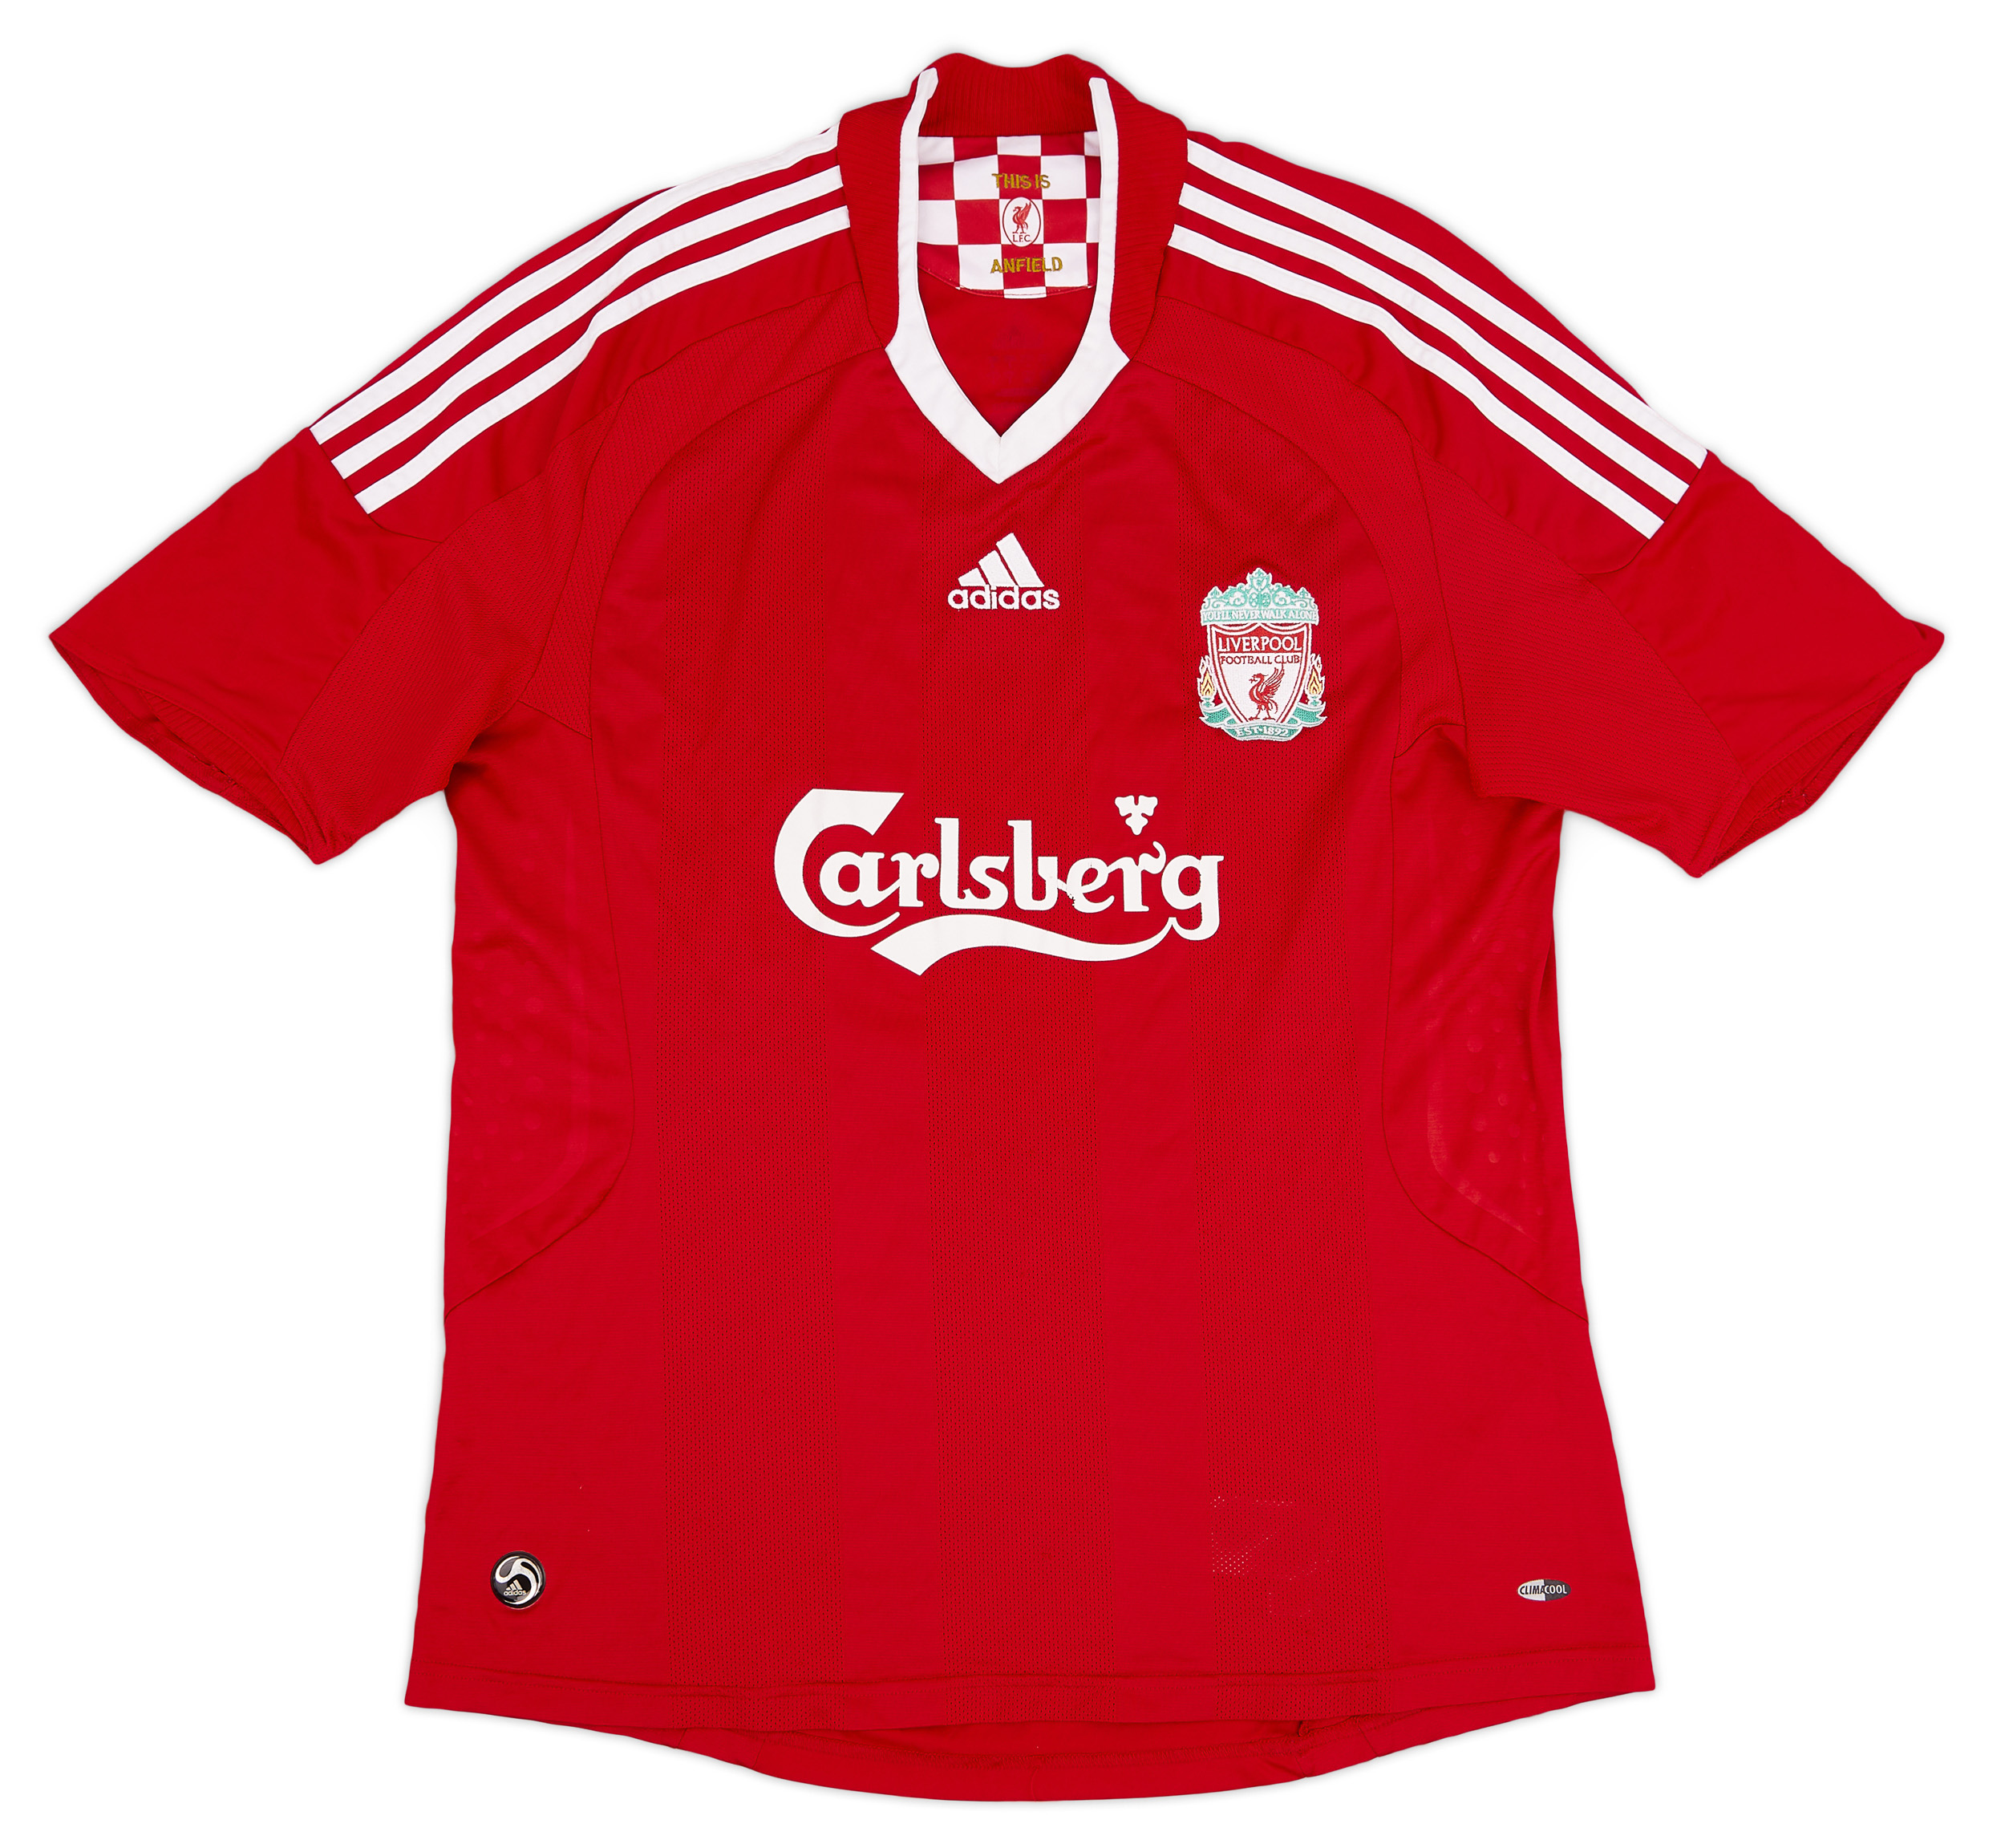 2008-10 Liverpool Home Shirt - 5/10 - ()